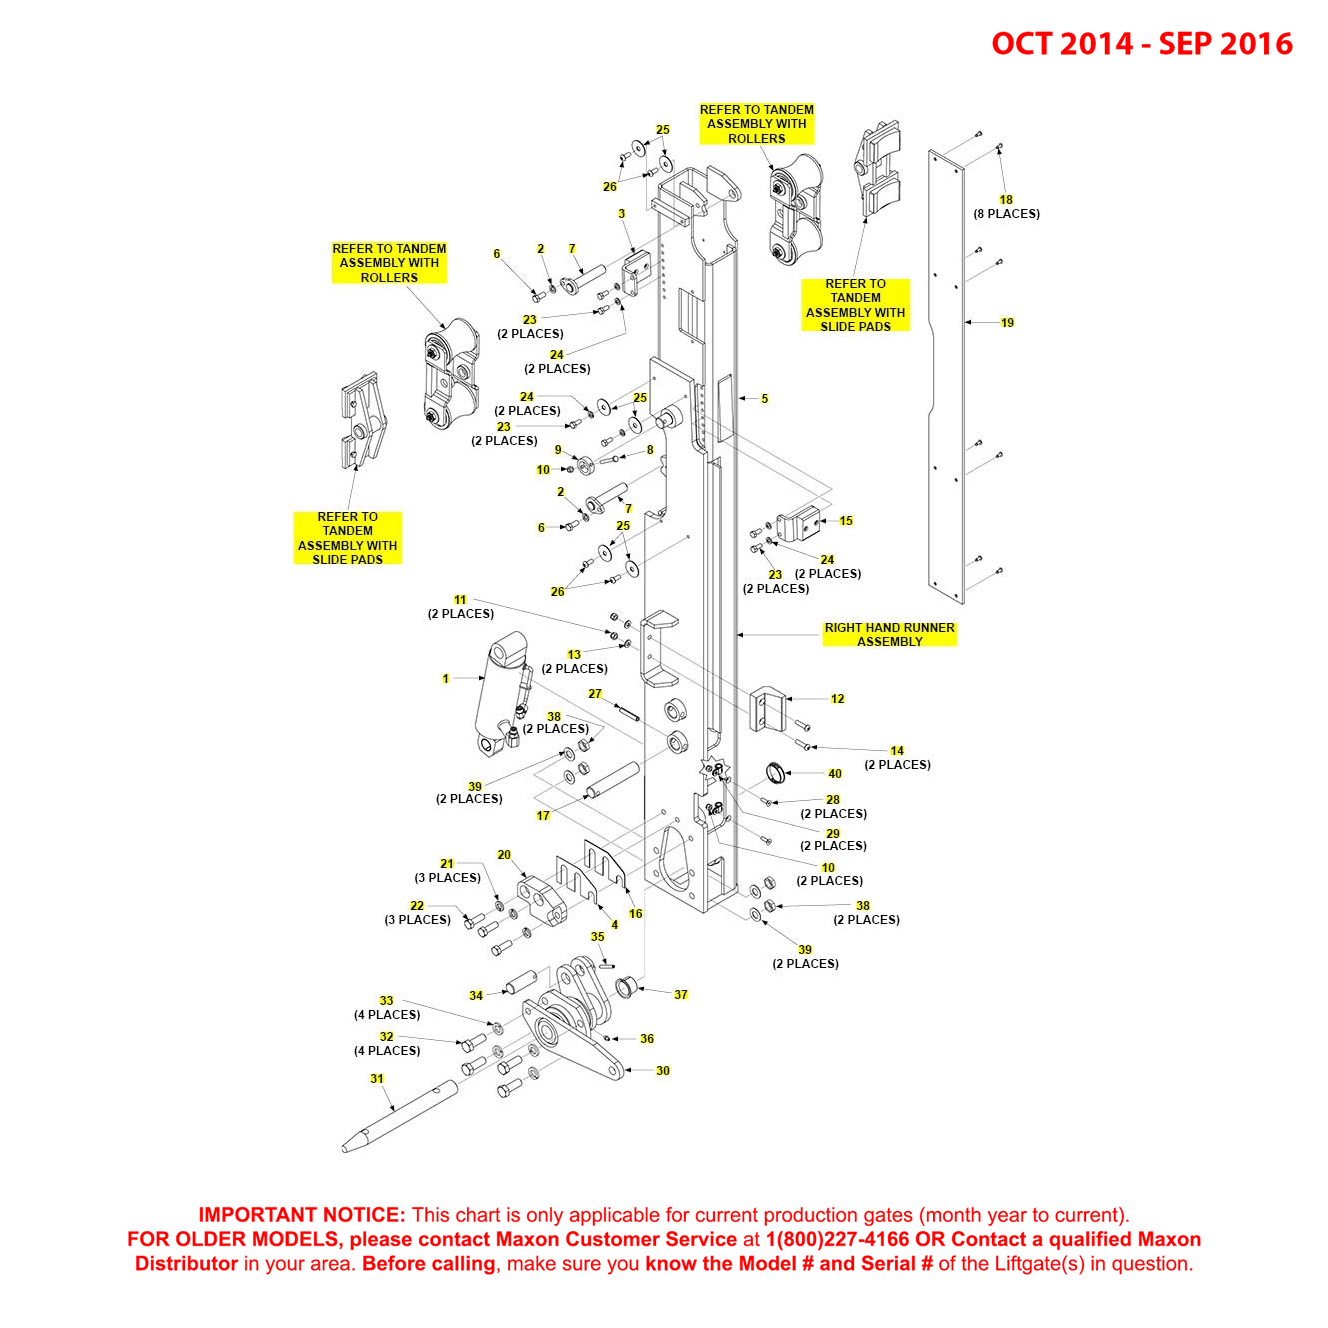 Maxon BMR (Oct 2014 - Sep 2016) Right Hand Runner Assembly Diagram